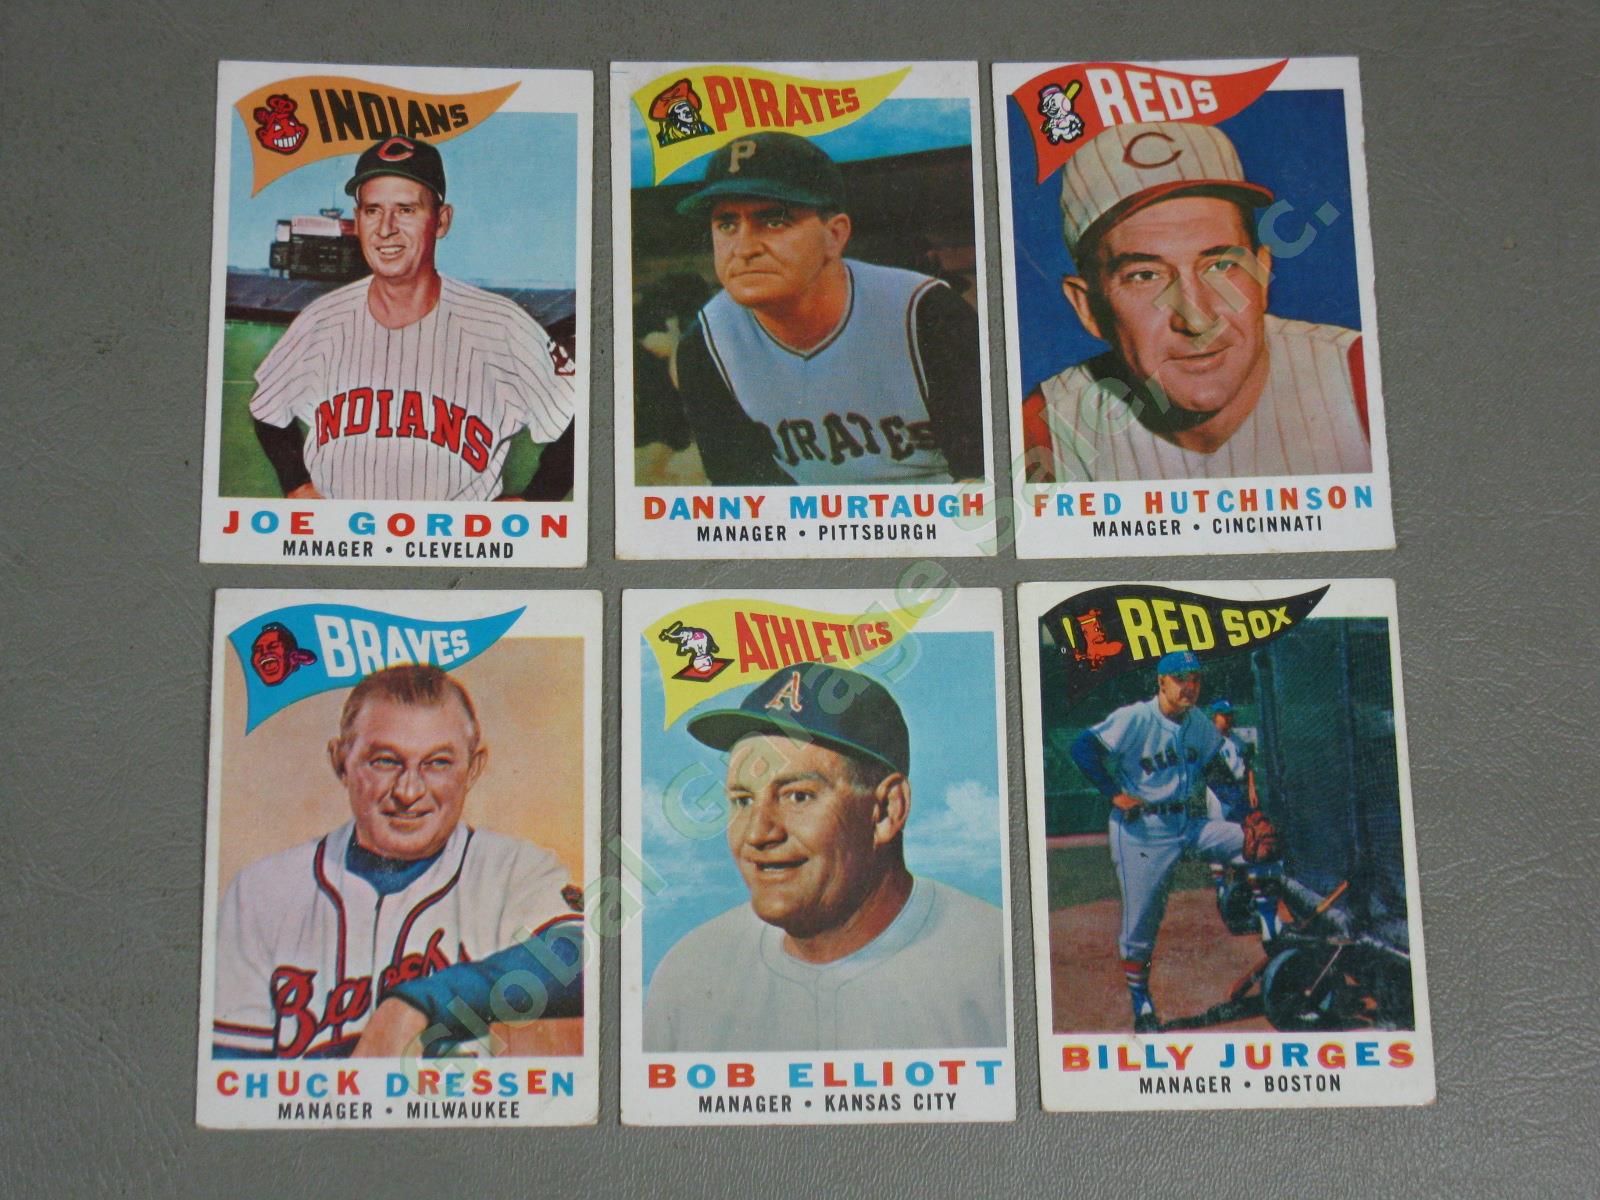 165 VtgTopps 1960 Baseball Card Collection Lot Rookies Teams Senators Braves NR! 8